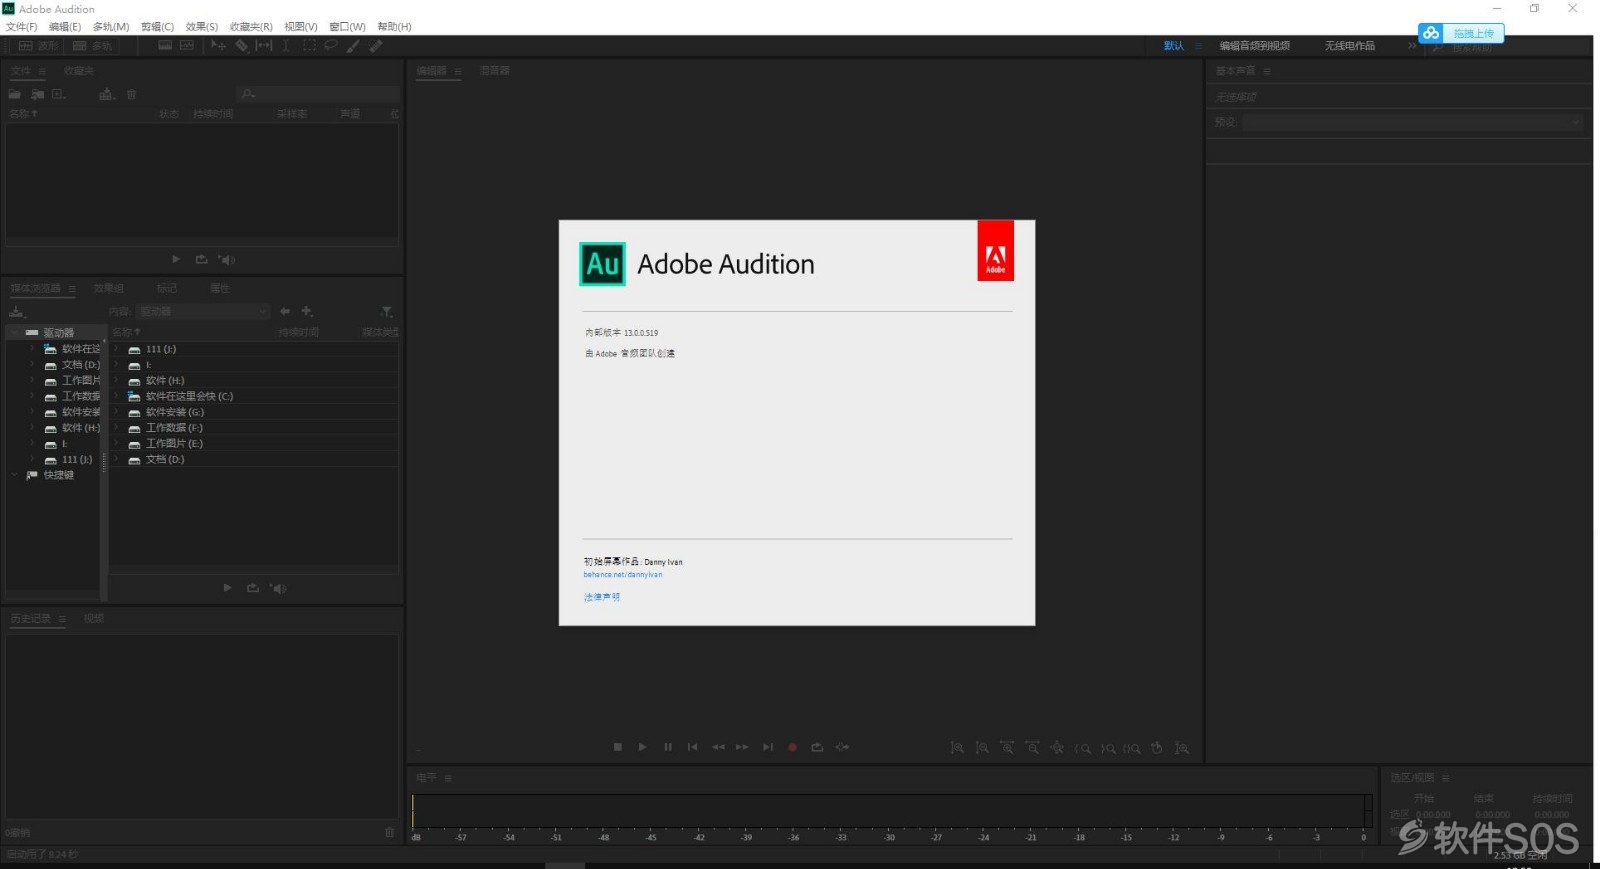 Adobe Audition 2020 v13.0.9 音频工作站 直装版